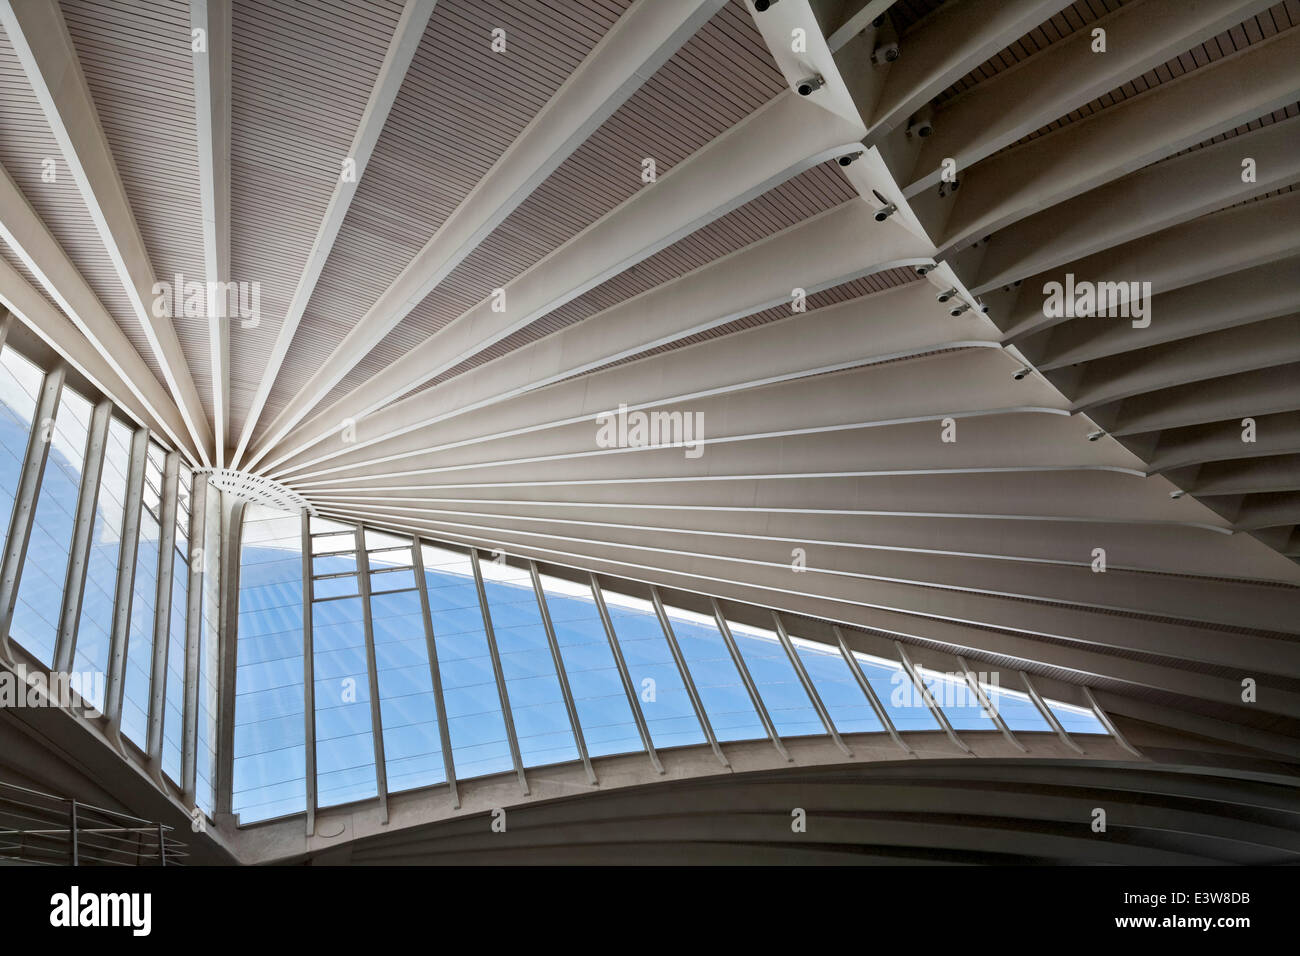 Sondika Airport, Bilbao, Bilbao, Spain. Architect: Santiago Calatrava, 2000. Stock Photo